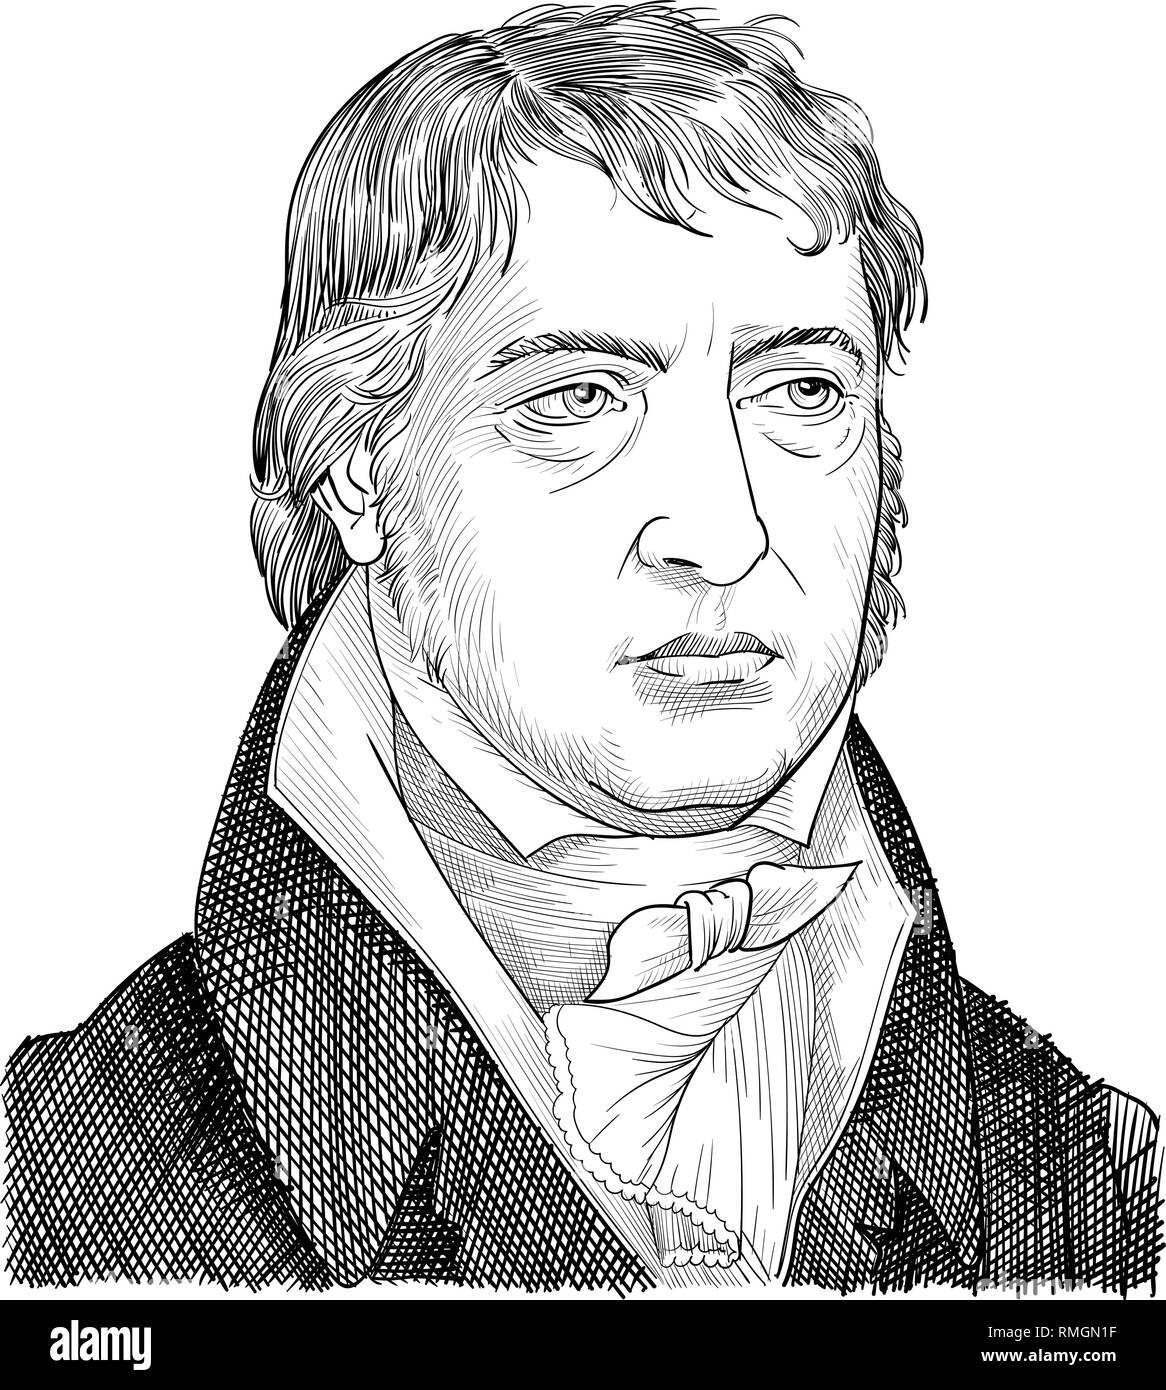 George Wilhelm Friedrich Hegel portrait line art illustration. He was a German philosopher and important figure of German idealism. Stock Vector